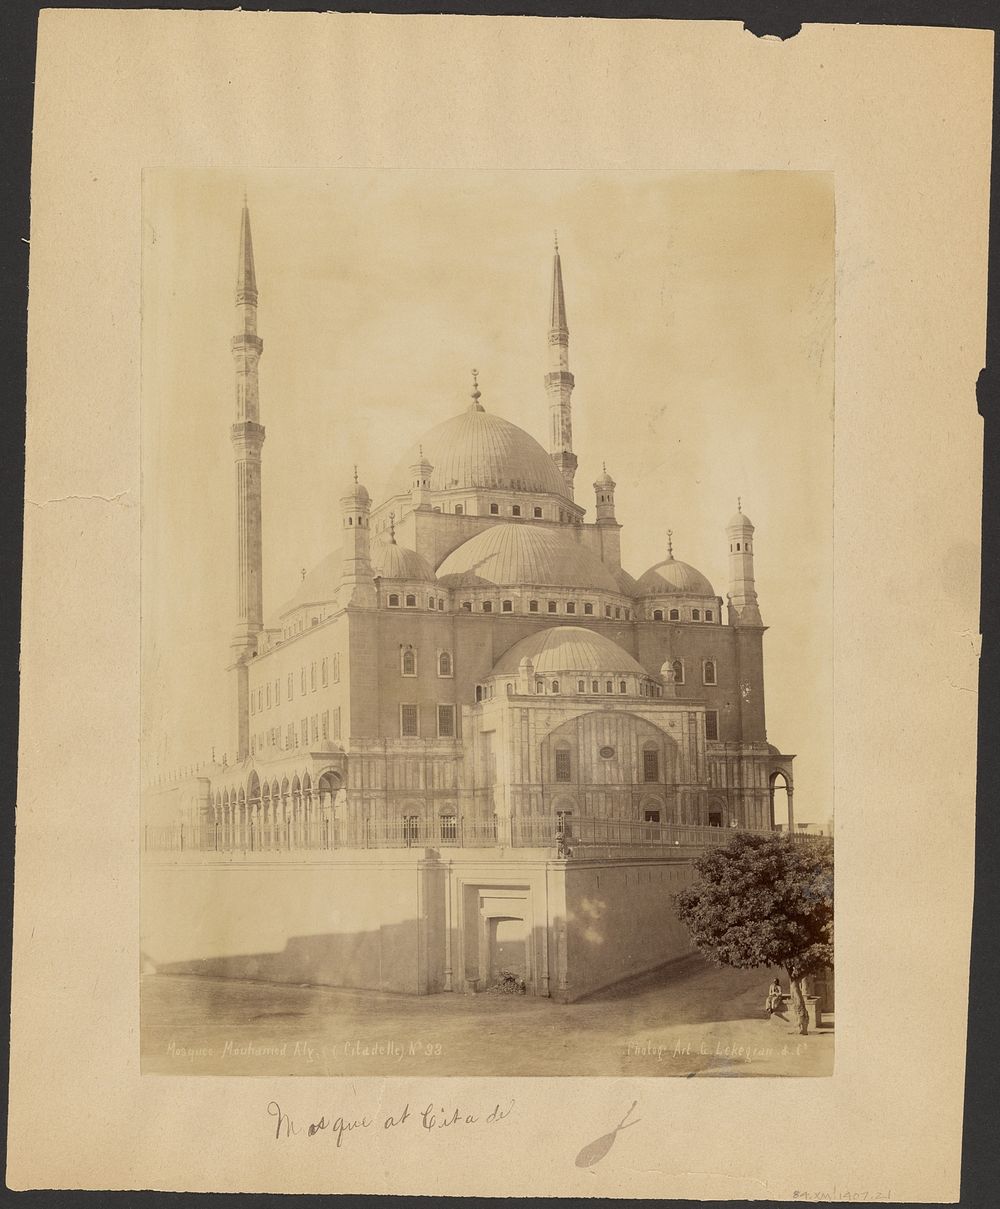 Mosquee Muhammed Ali (Citadelle) by G Lekegian